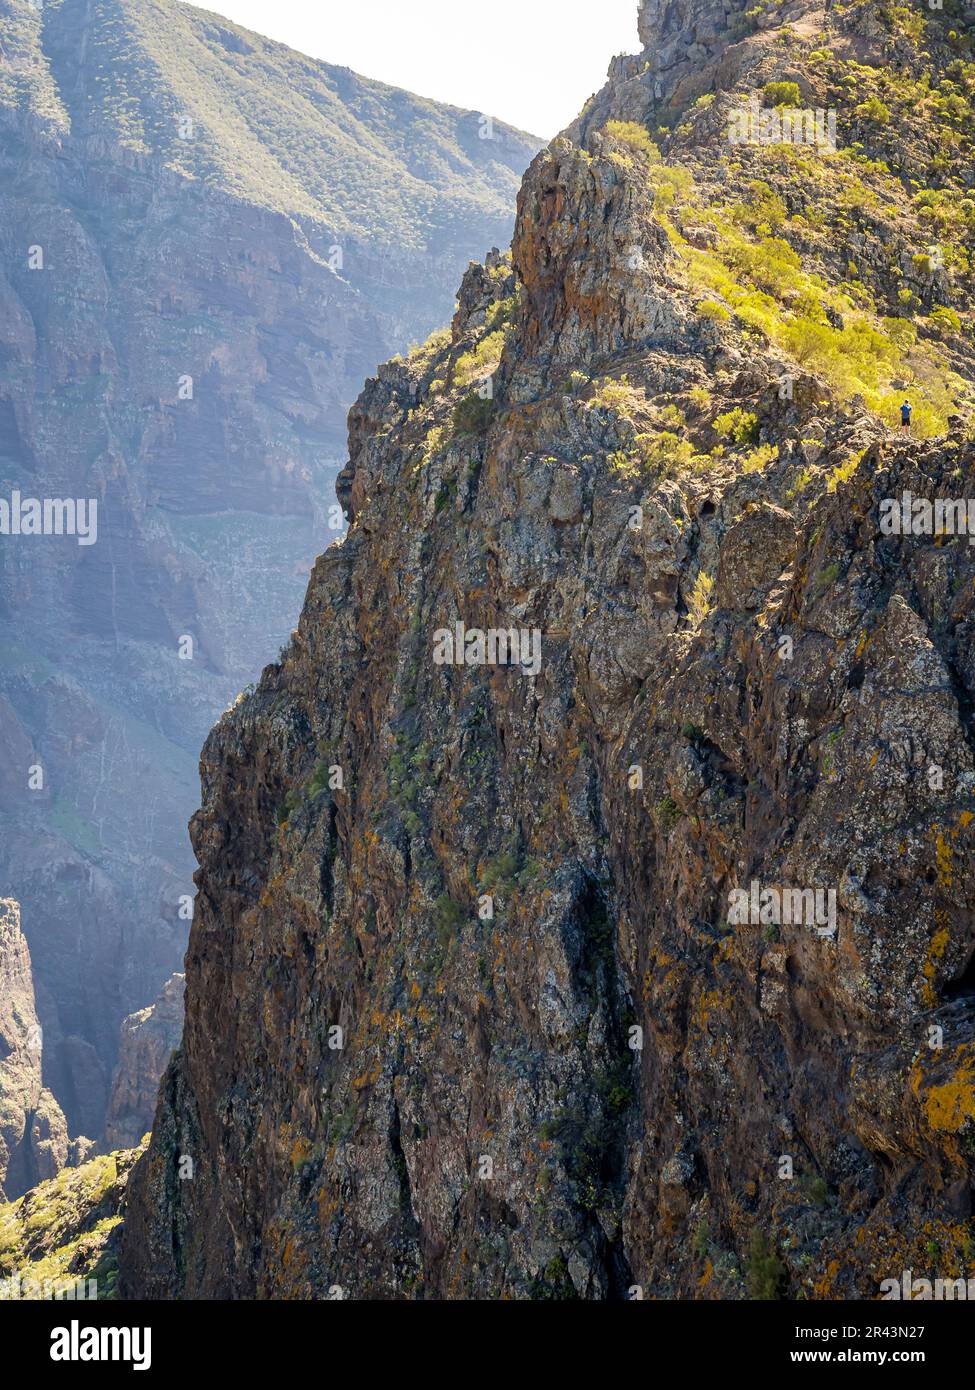 A man seeks a thrilling adventure as he treks the Calzada de los Antiguos path, a daring hiking trail along the edge of a mountain ridge with breathta Stock Photo